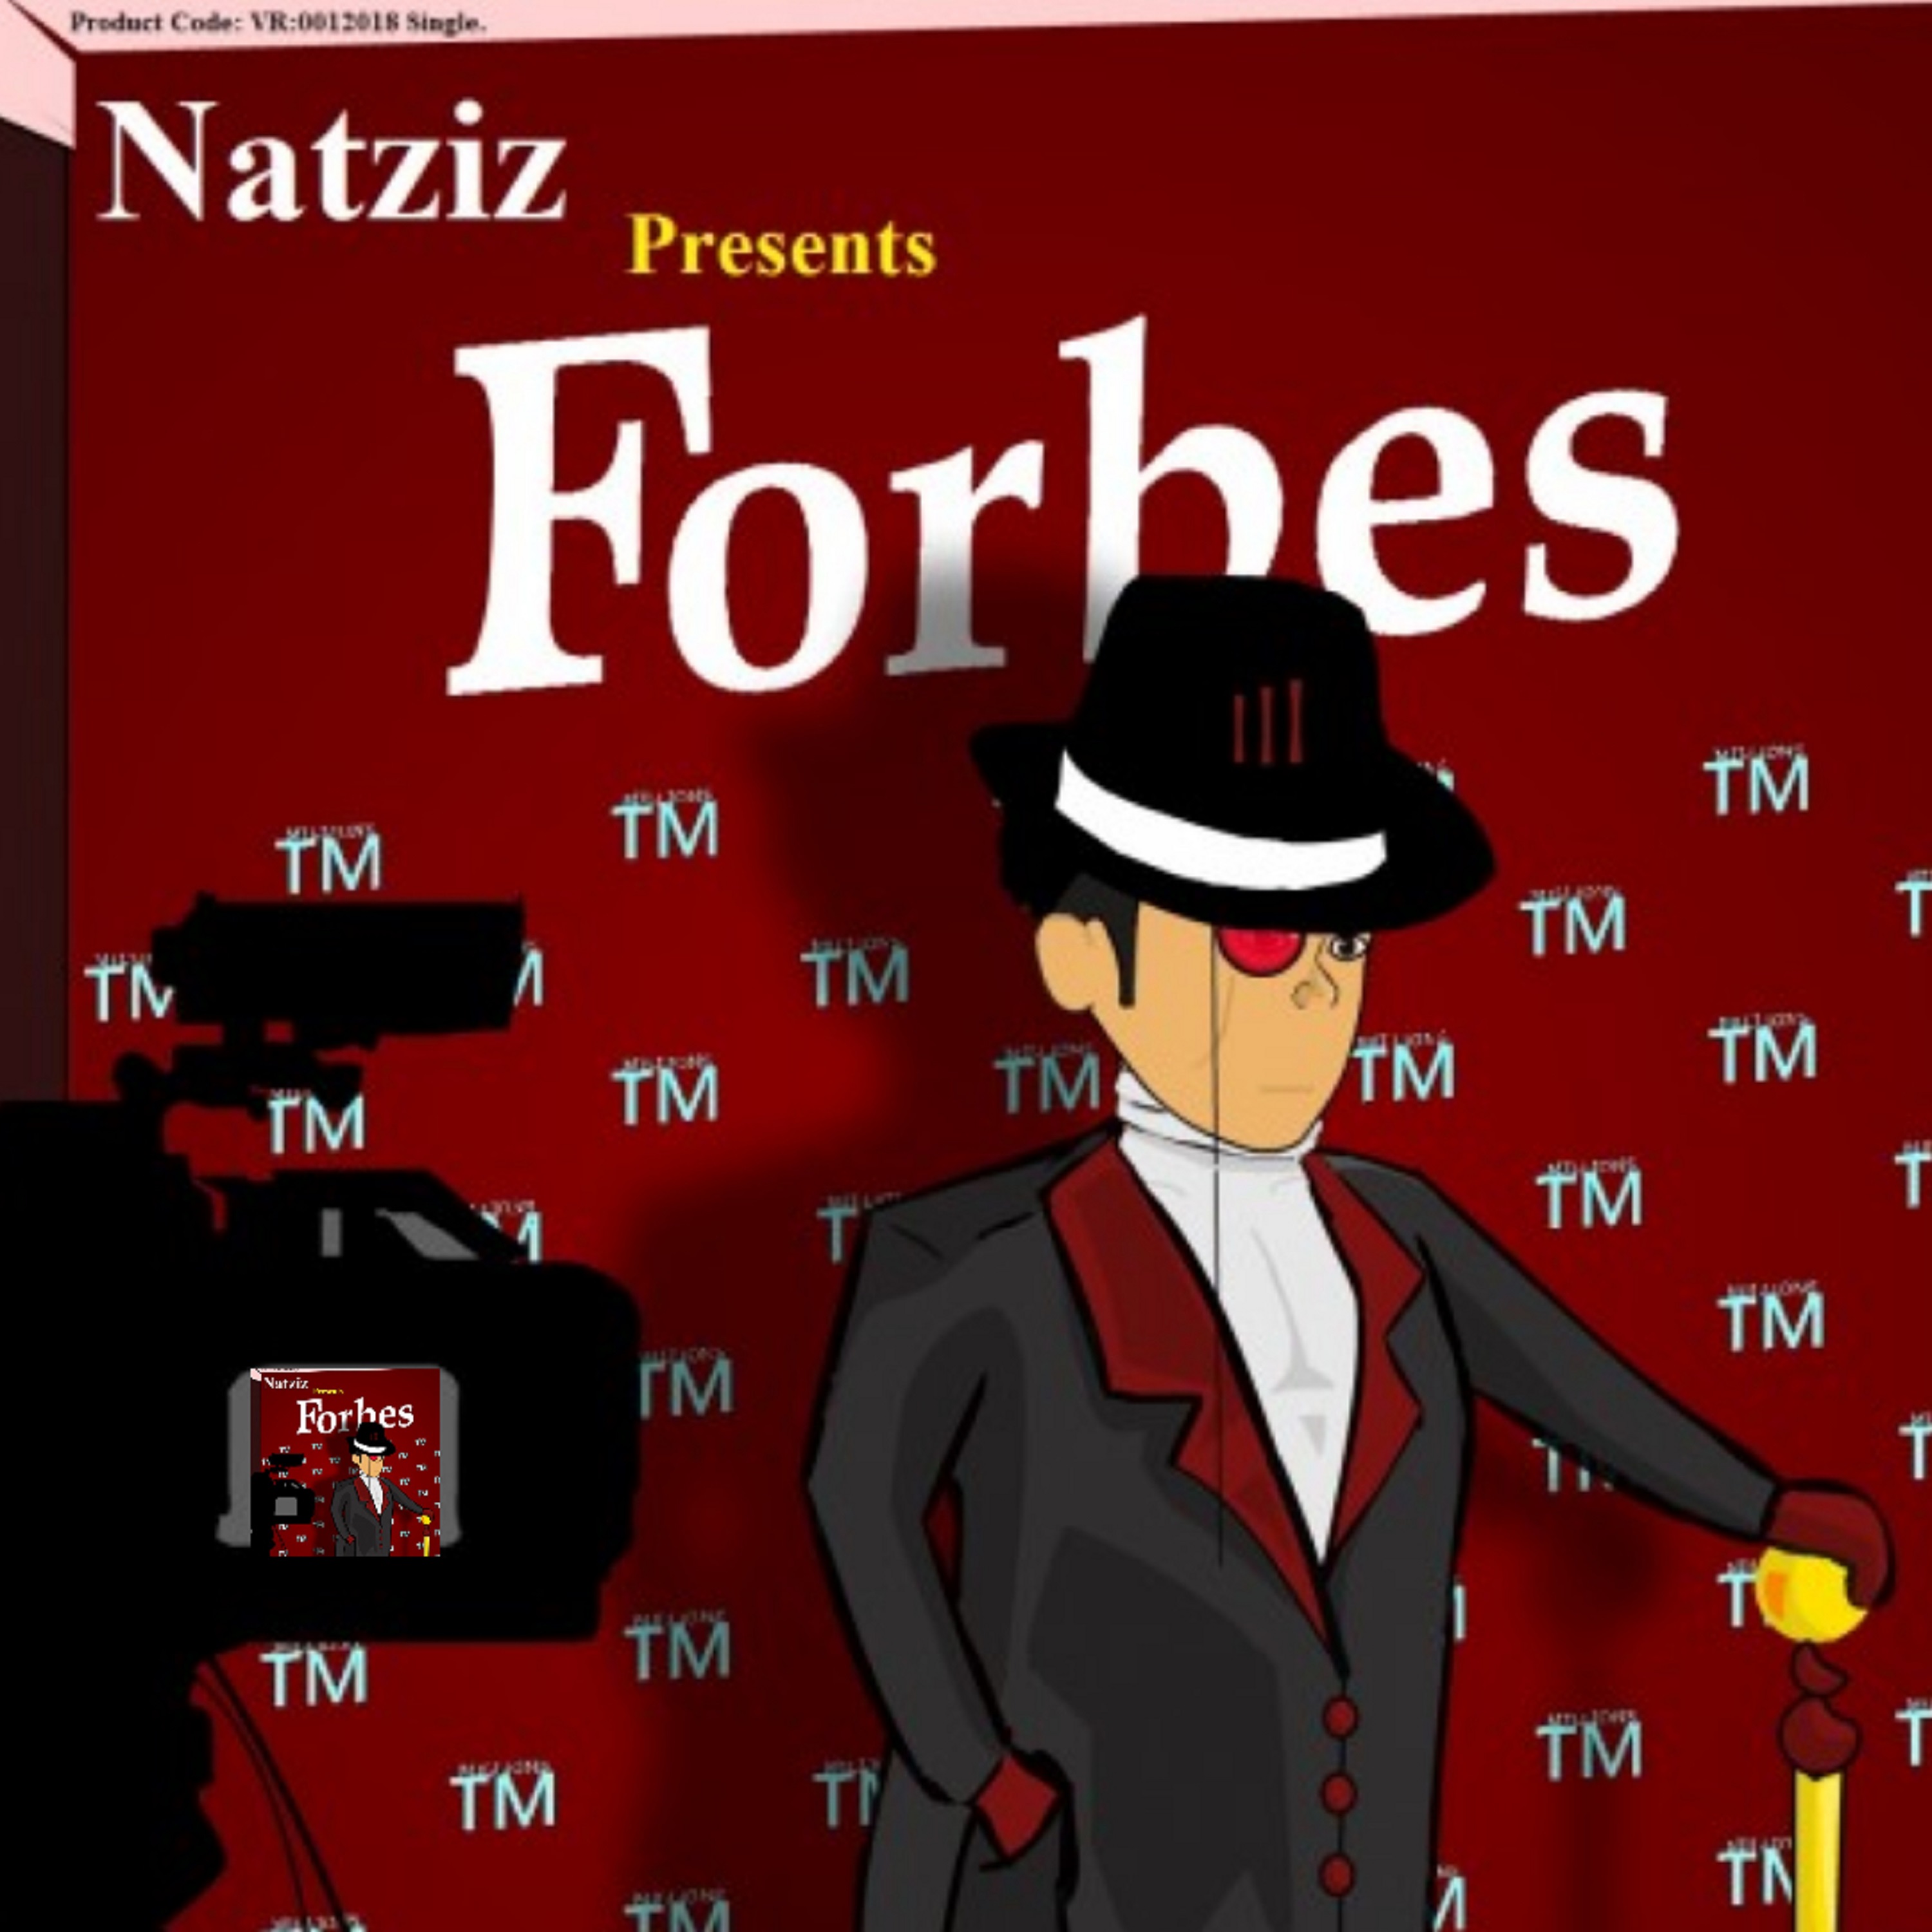 Forbes by Narziz Single Artwork.jpg